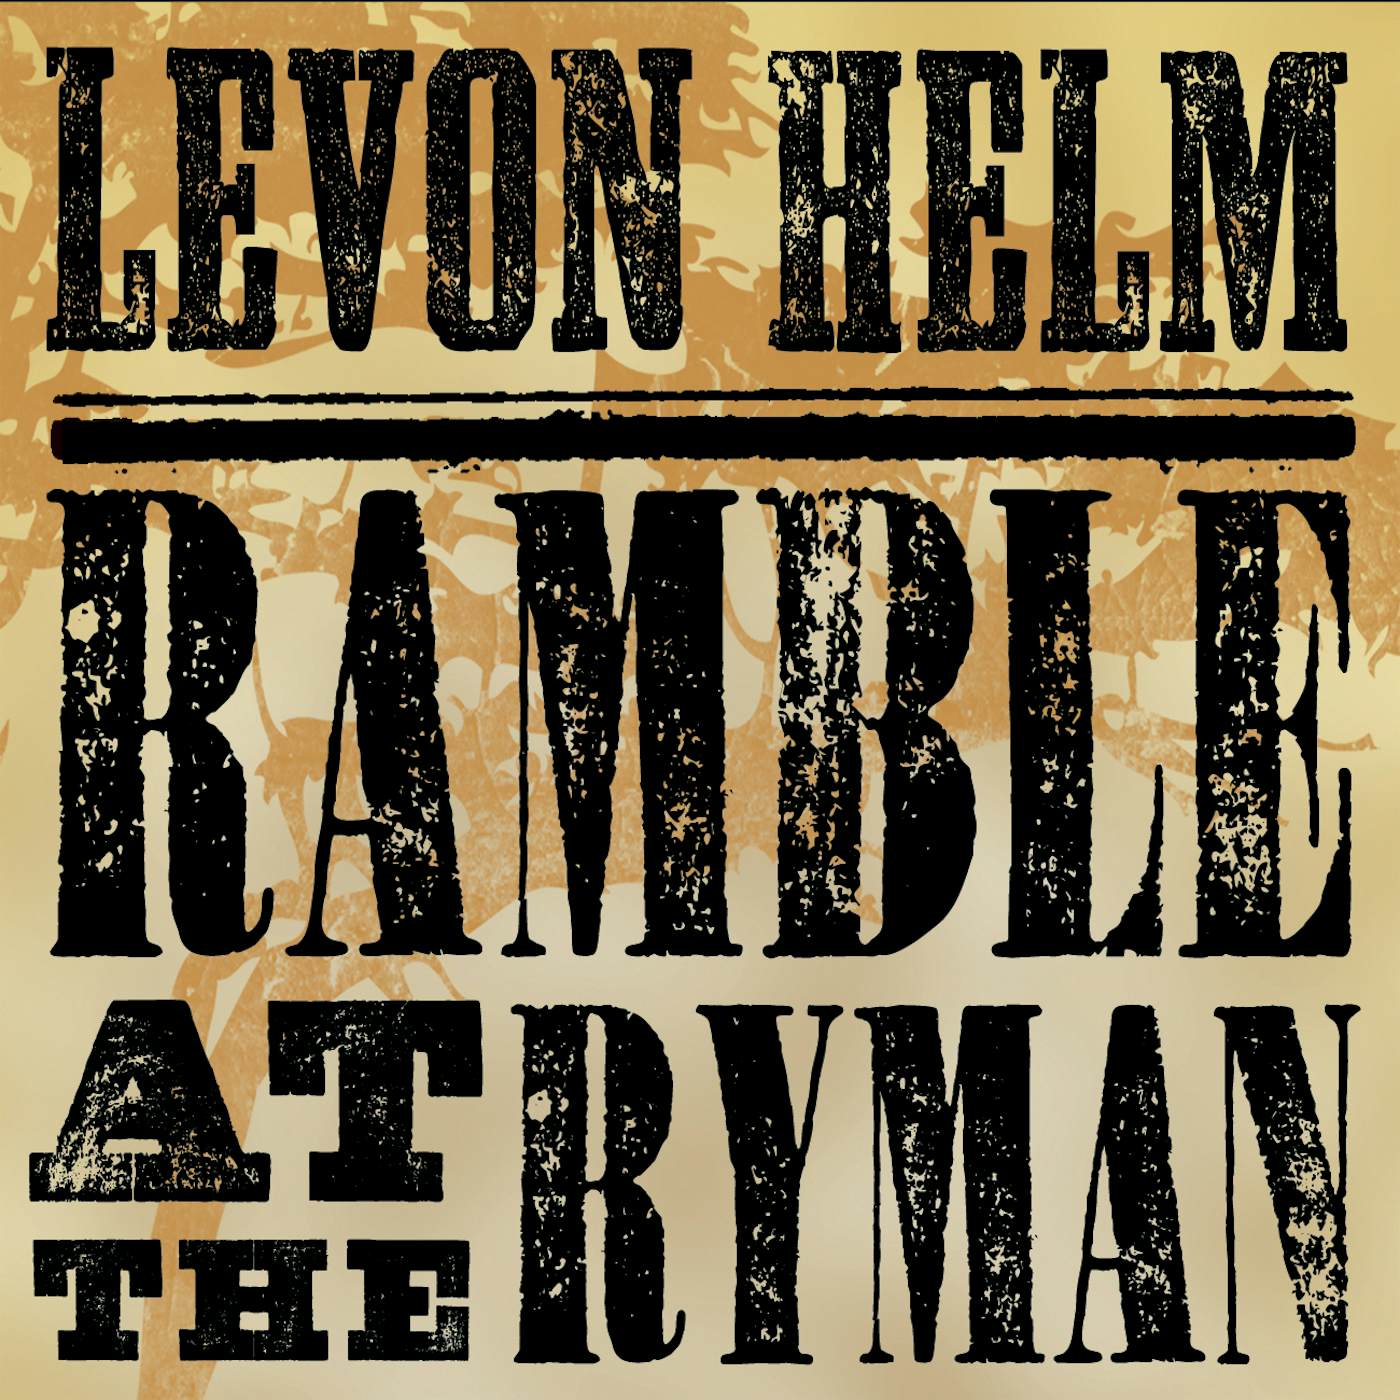 Levon Helm RAMBLE AT THE RYMAN CD